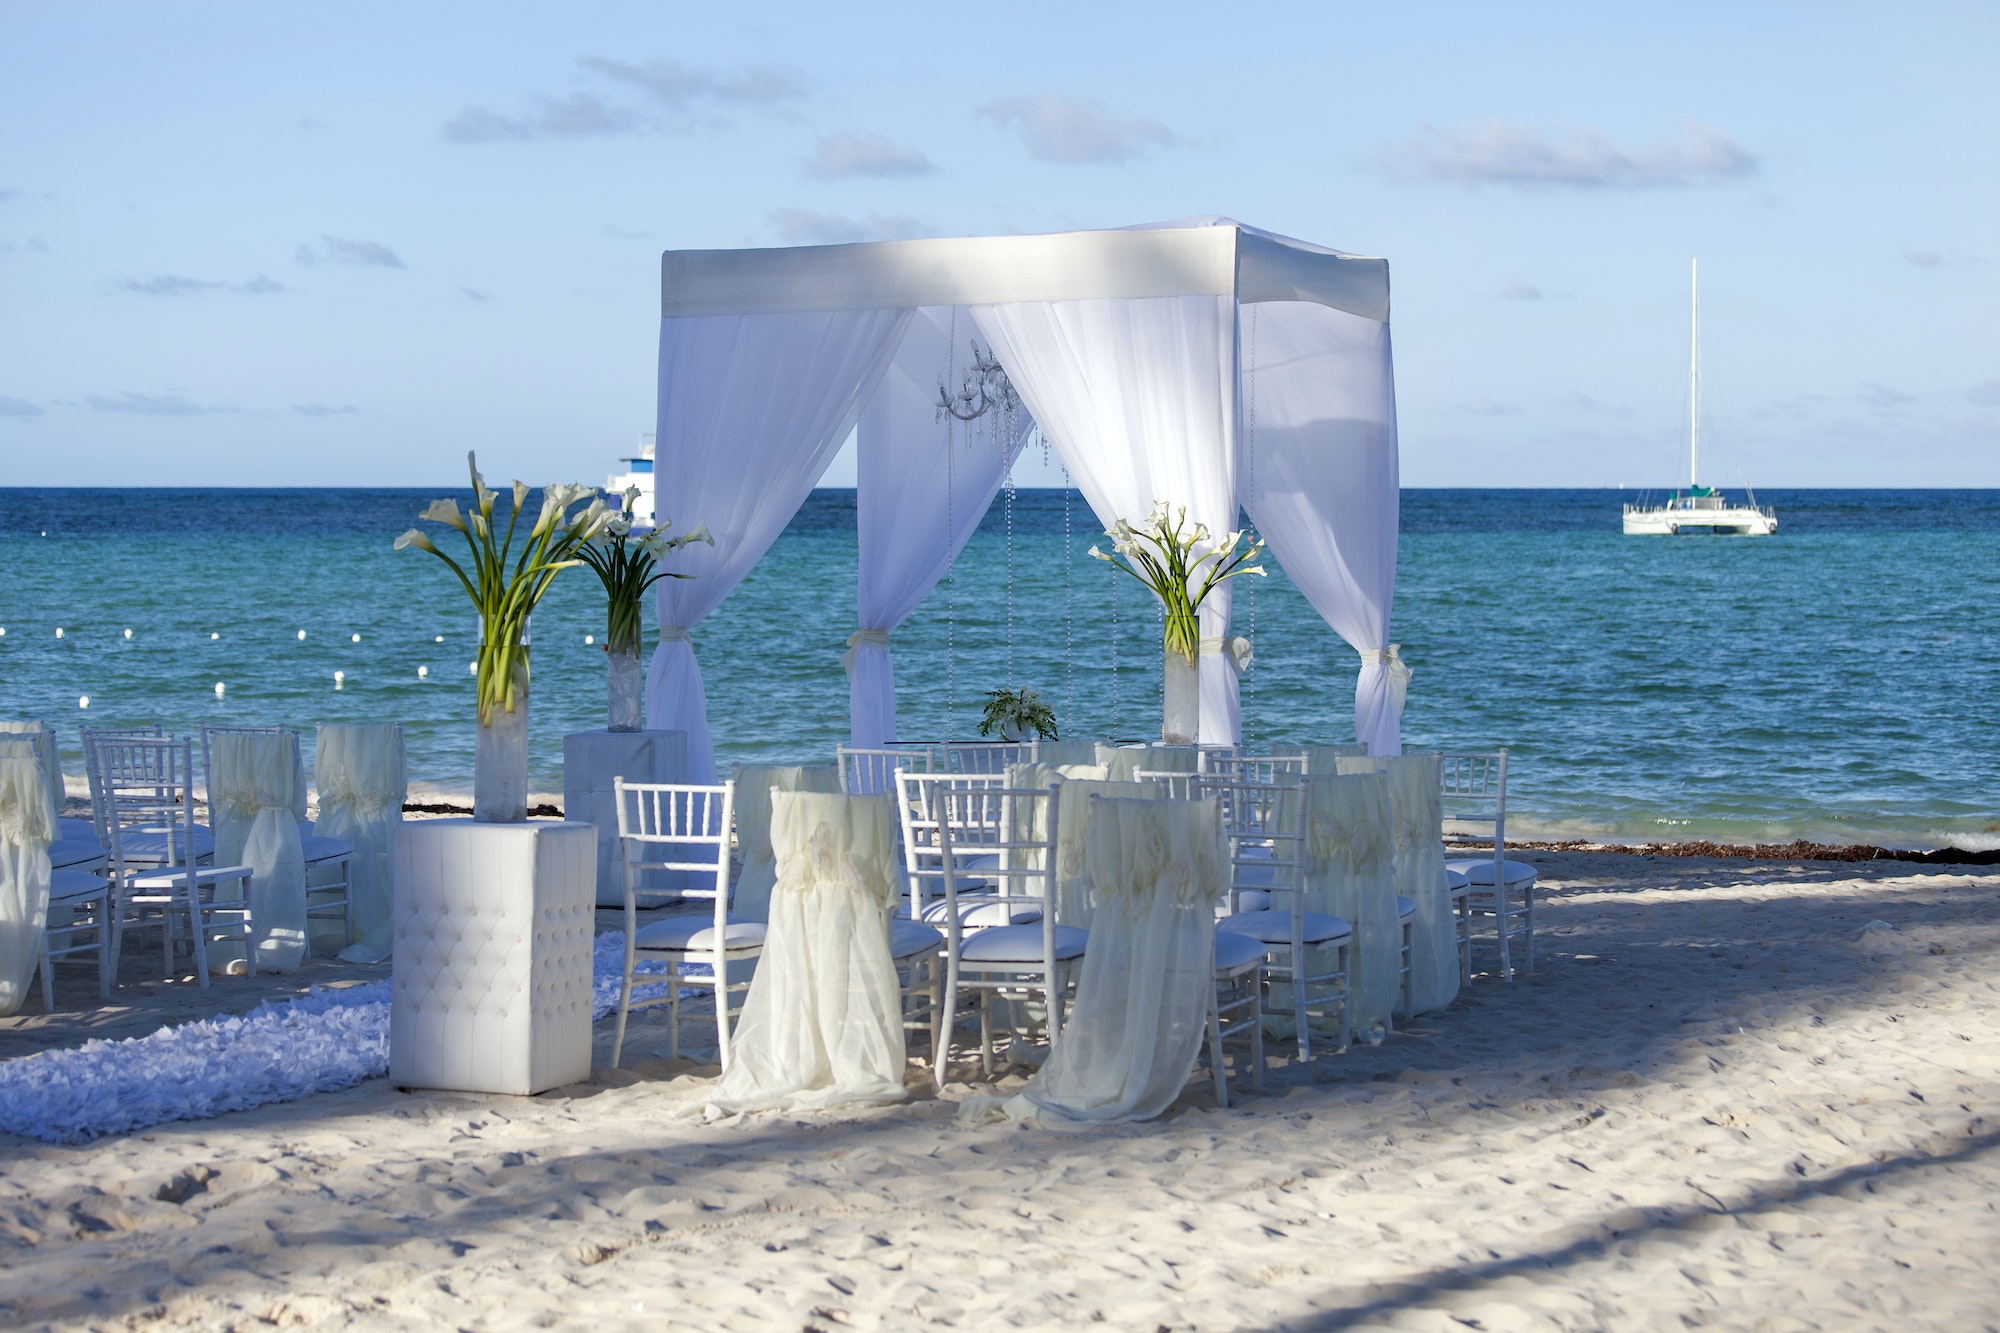 Beautiful wedding installation at the beach